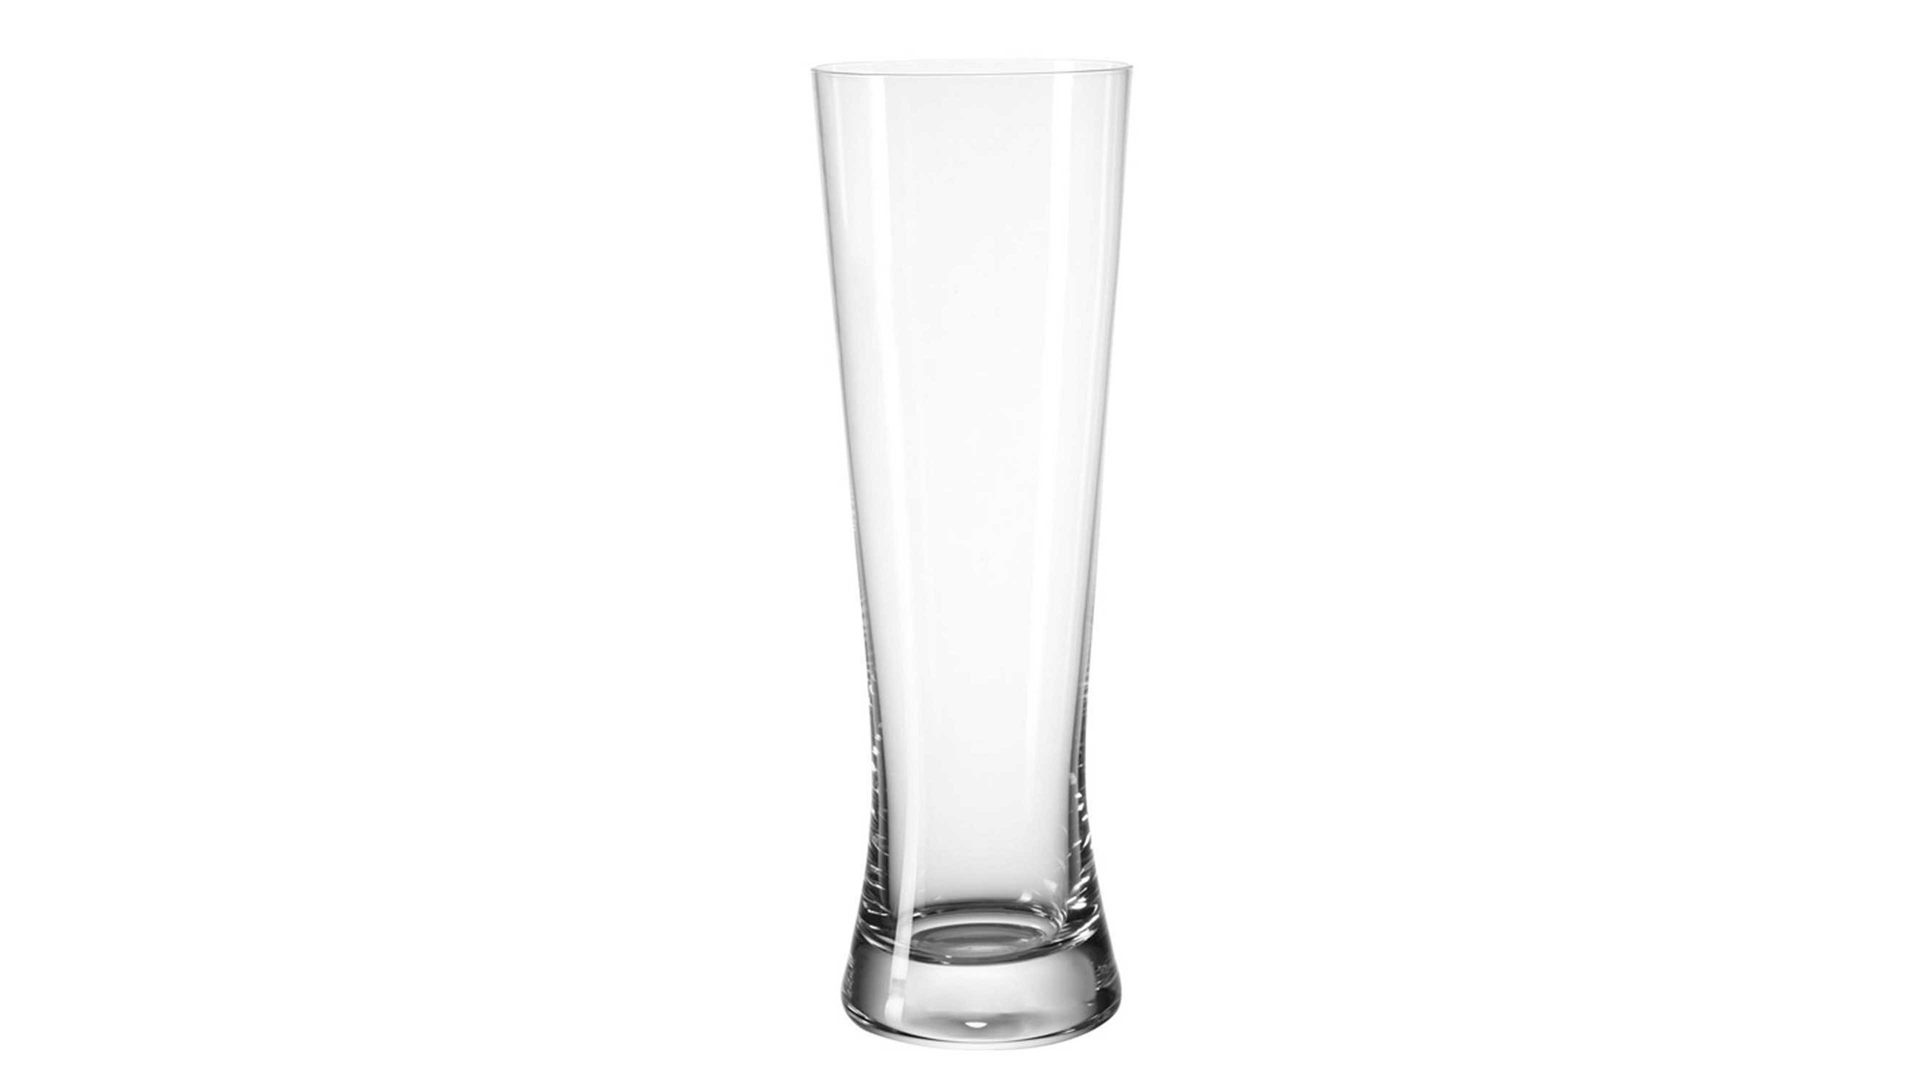 Bierglas Leonardo | glaskoch aus Glas in Transparent LEONARDO Weizenbierglas Bionda TEQTON®-Klarglas - ca. 500 ml Nutzinhalt